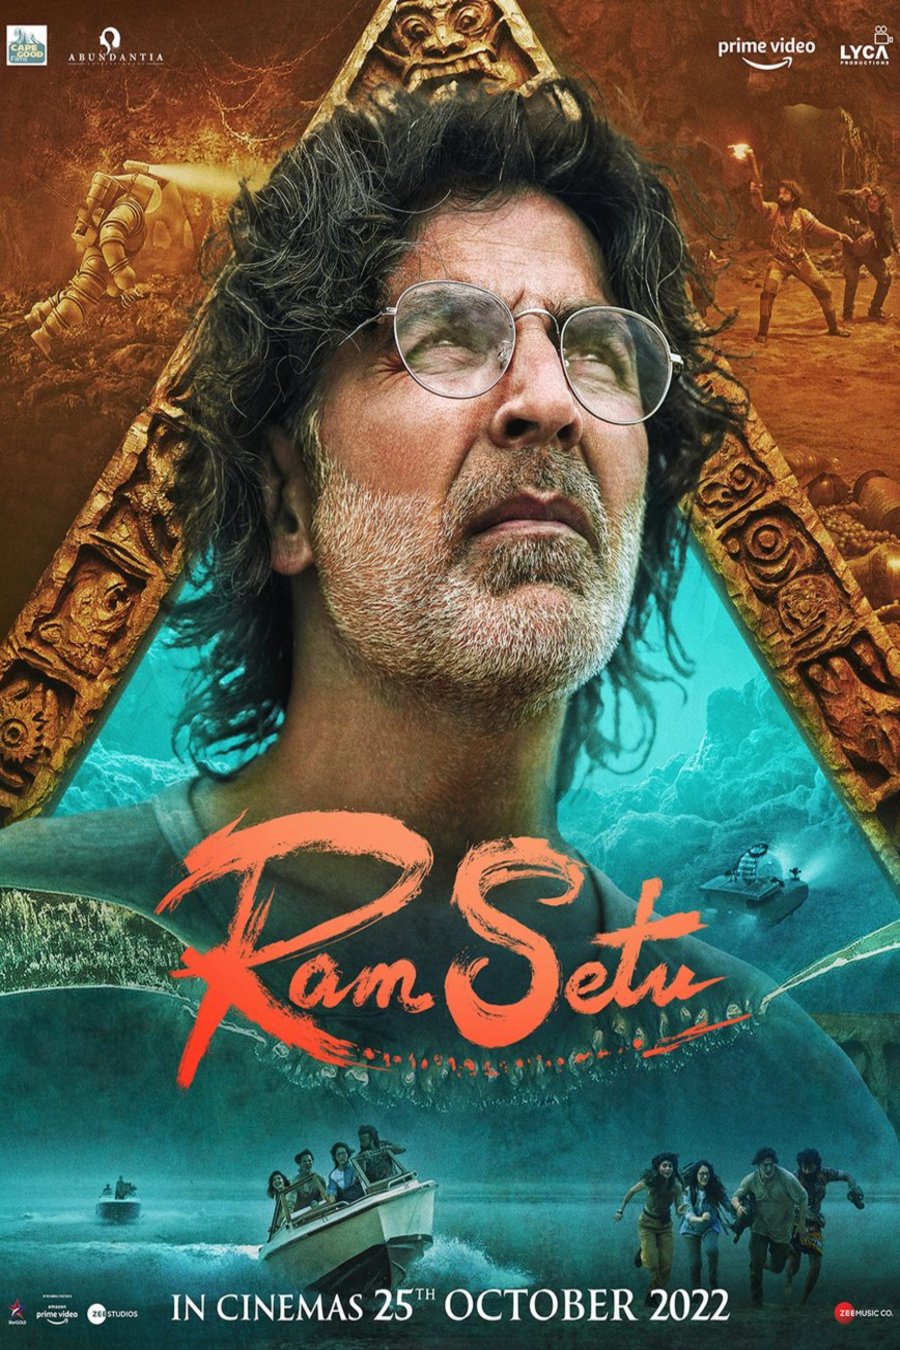 Hindi poster of the movie Ram Setu